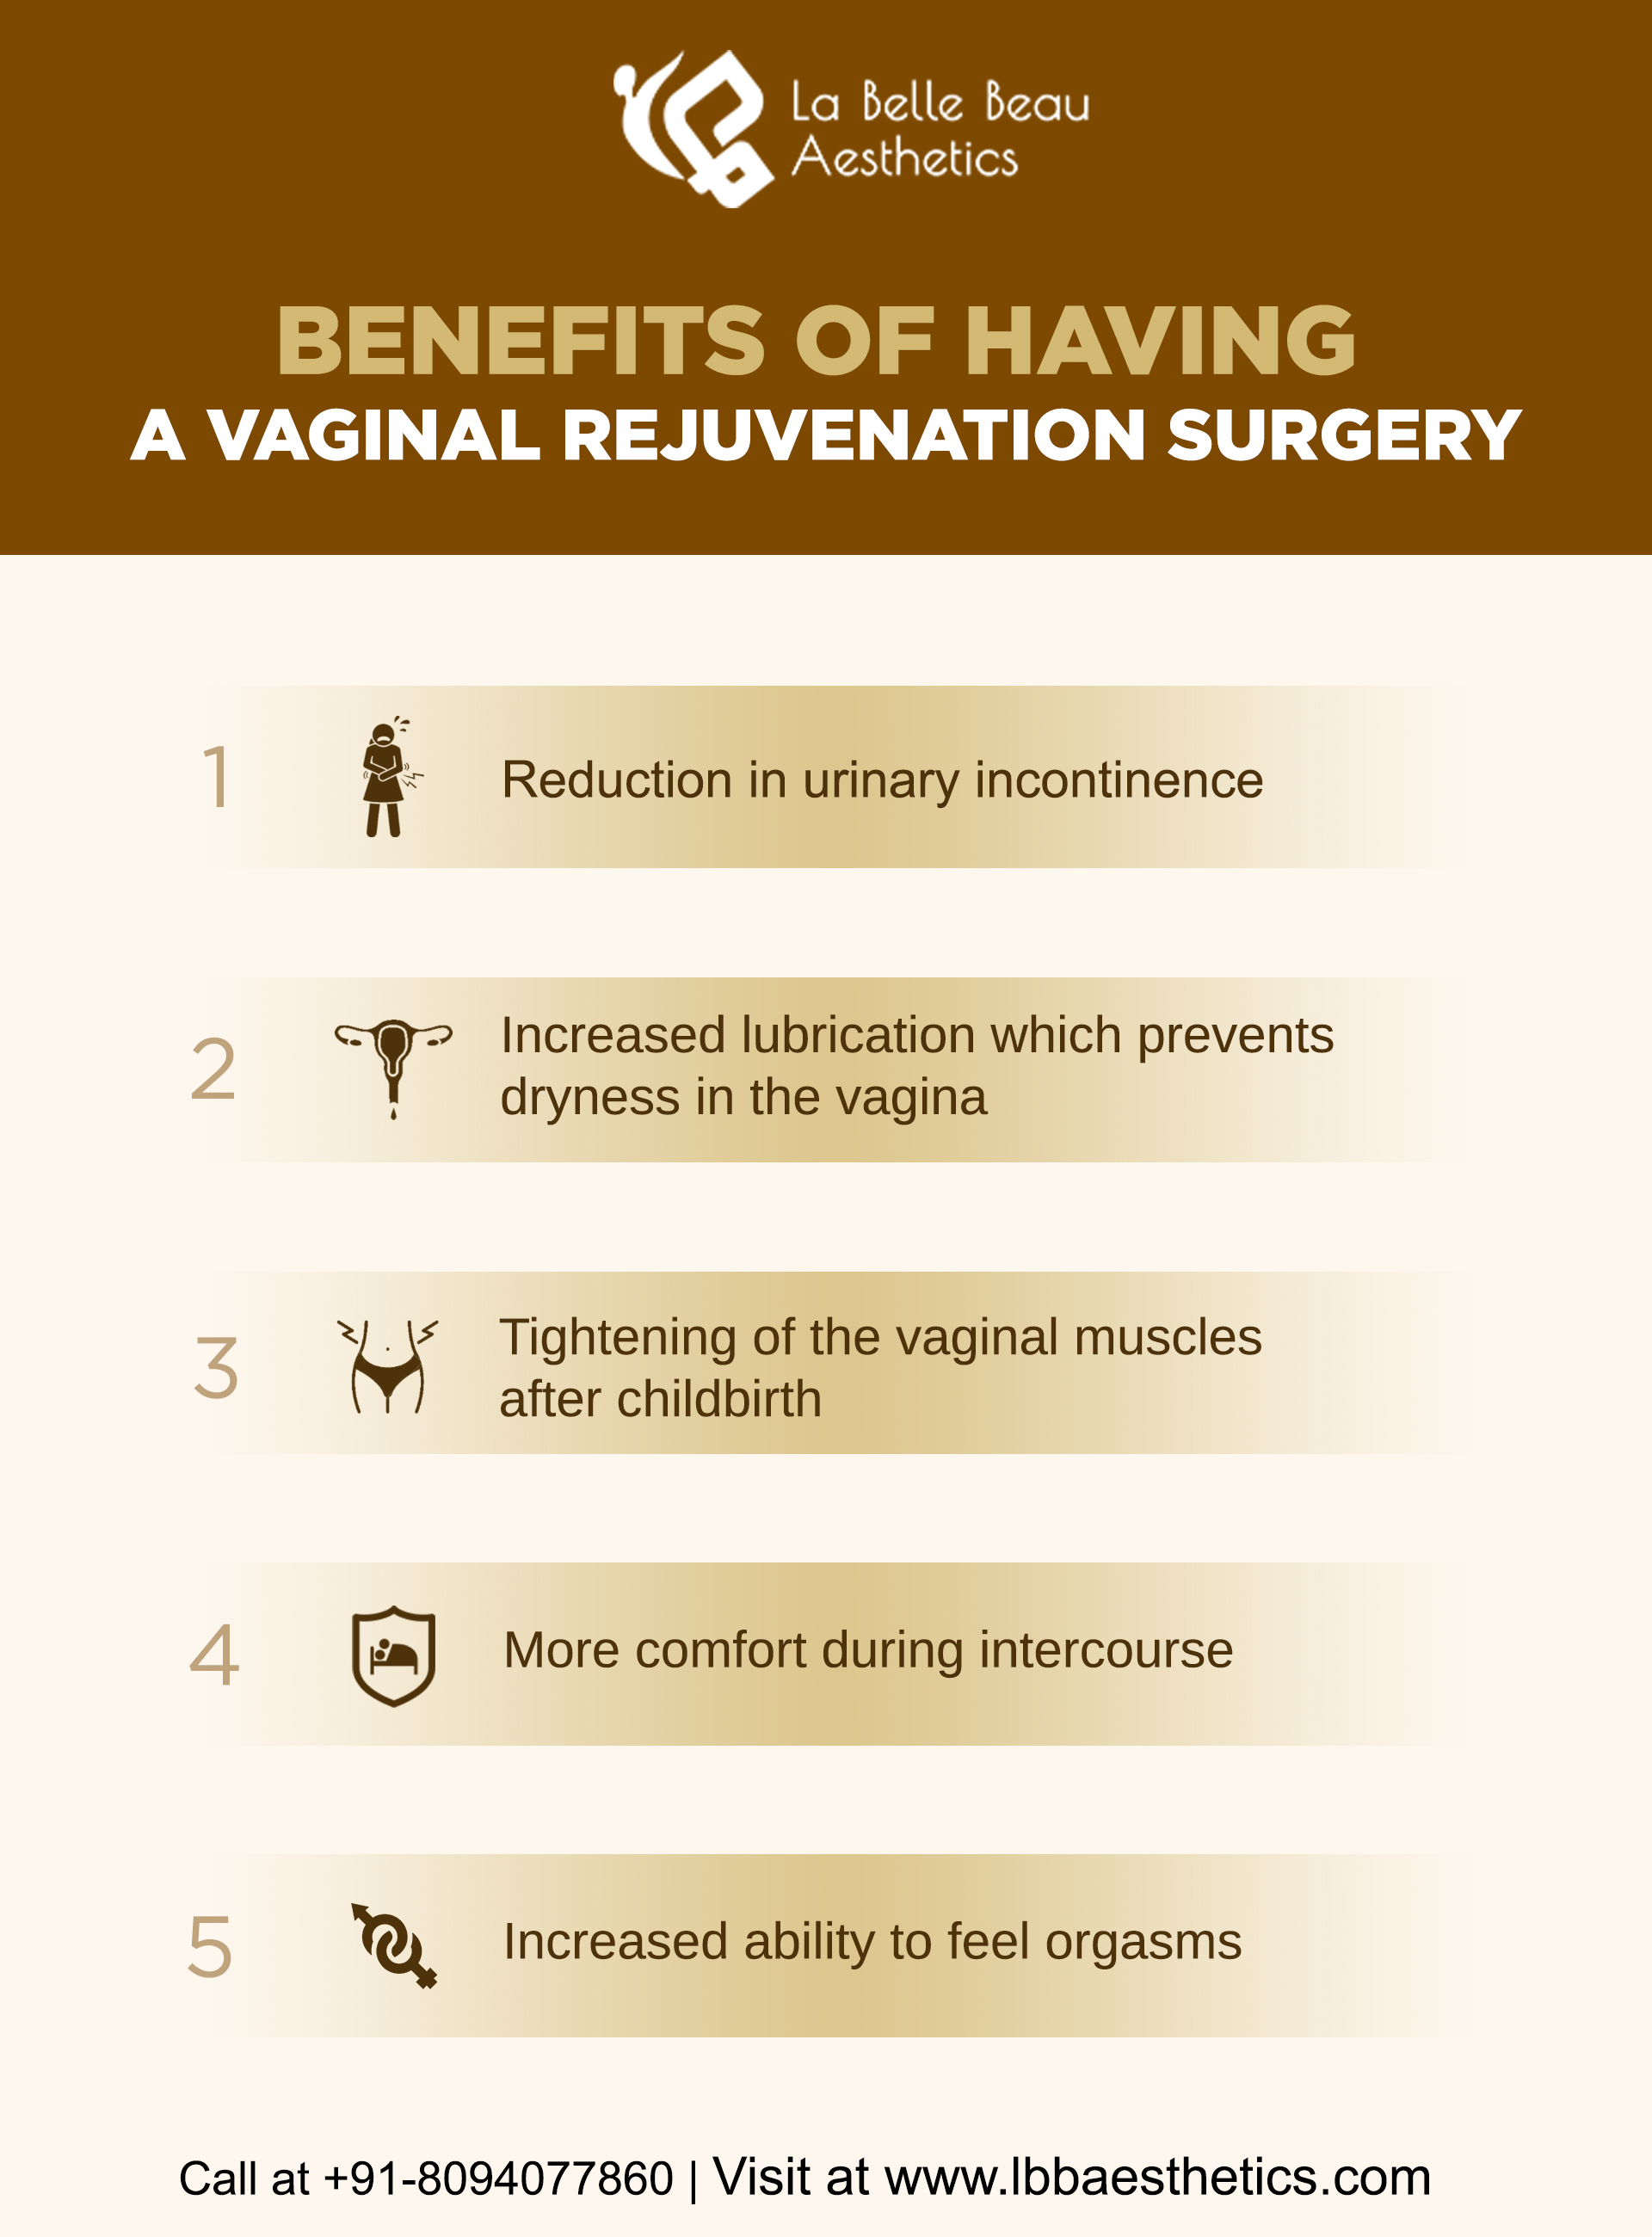 Benefits of Vaginal Rejuvenation Surgery